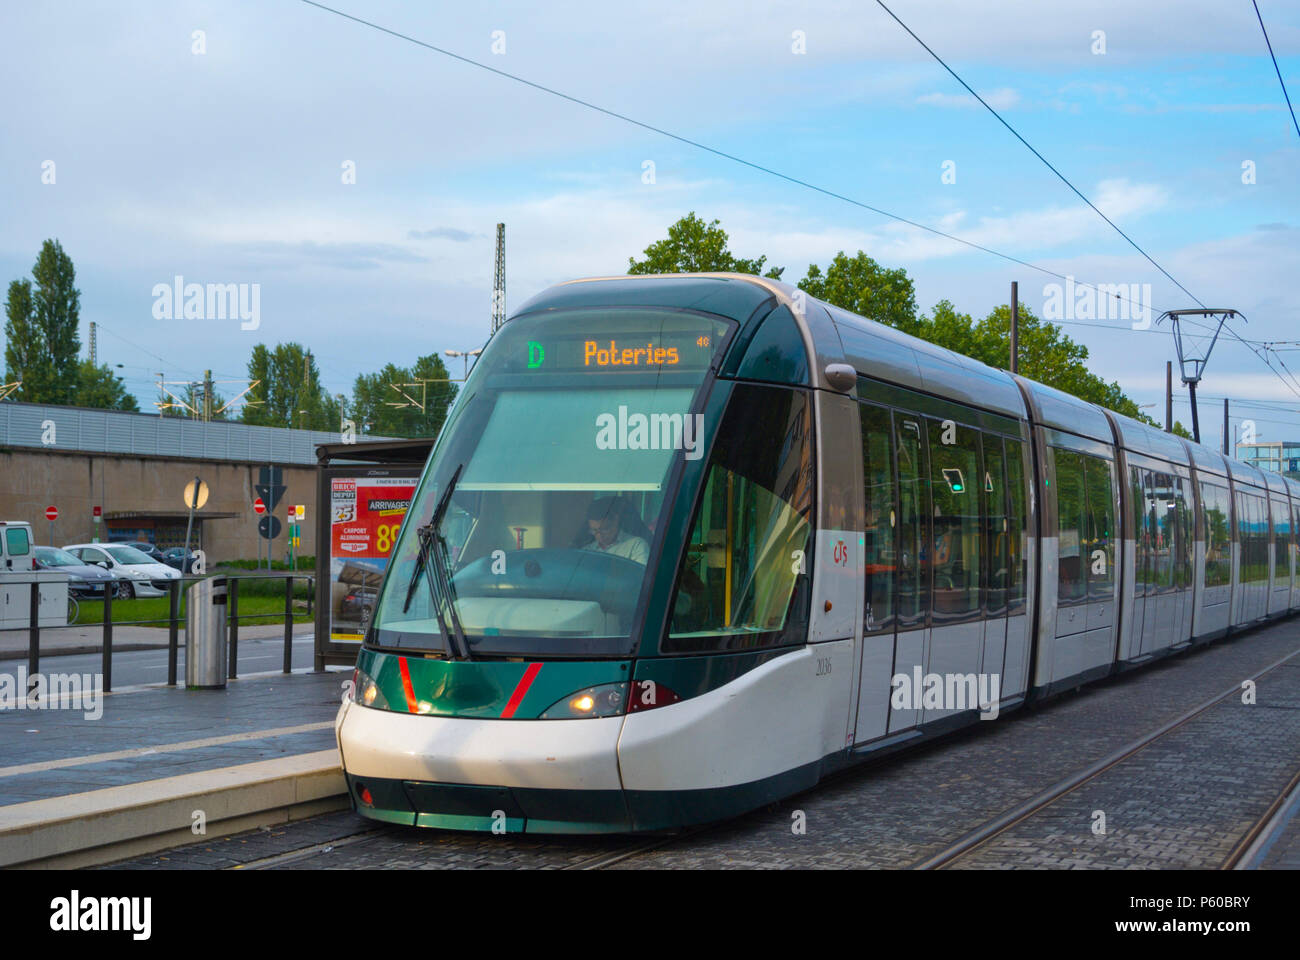 Kehl Bahnhof, tram stop, terminal stops for trams from Strasbourg, Kehl, Germany Stock Photo